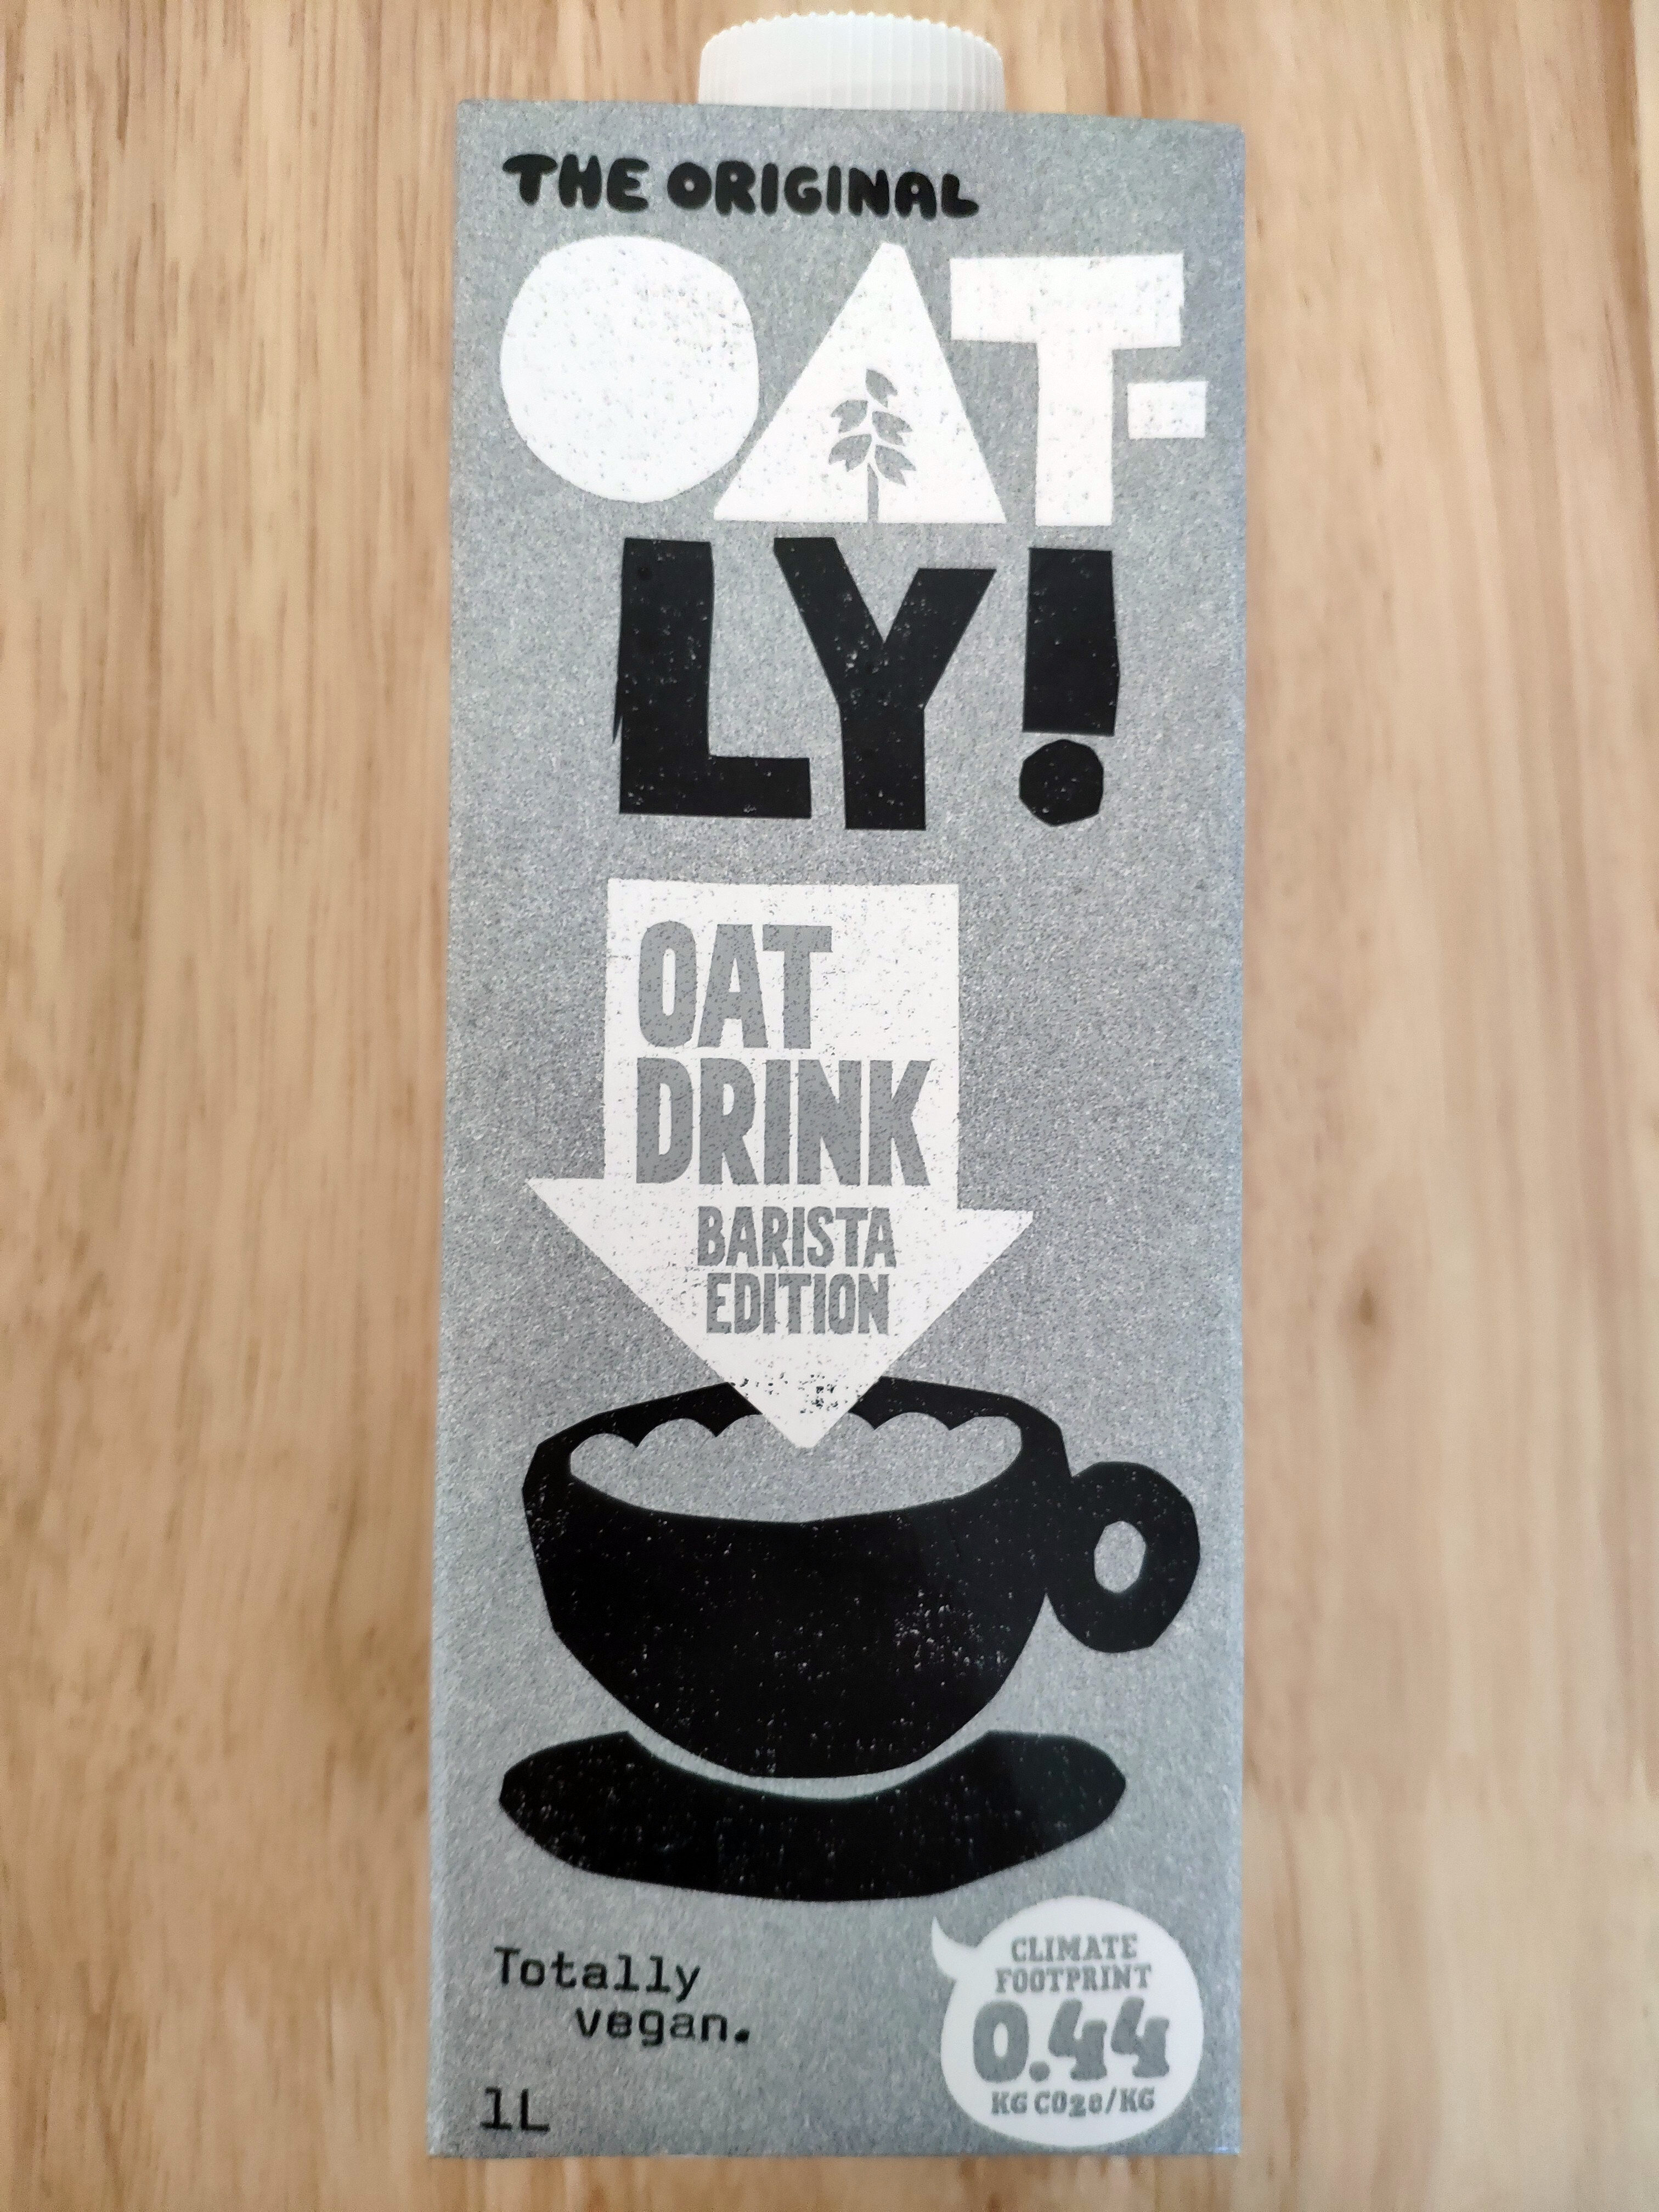 Oat drink barista edition - Product - en